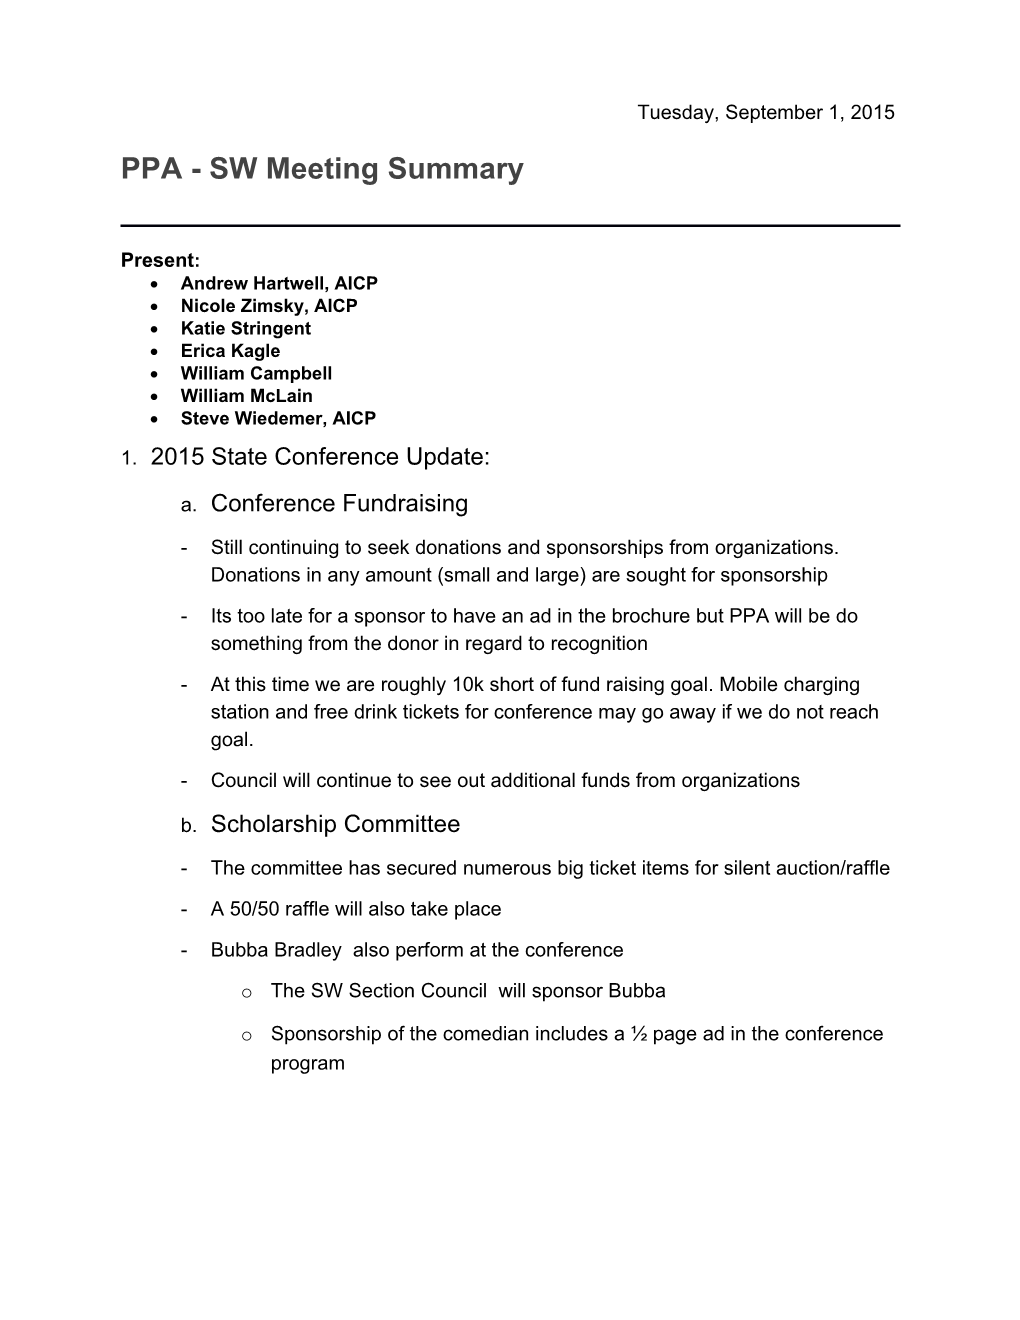 PPA - SW Meeting Summary